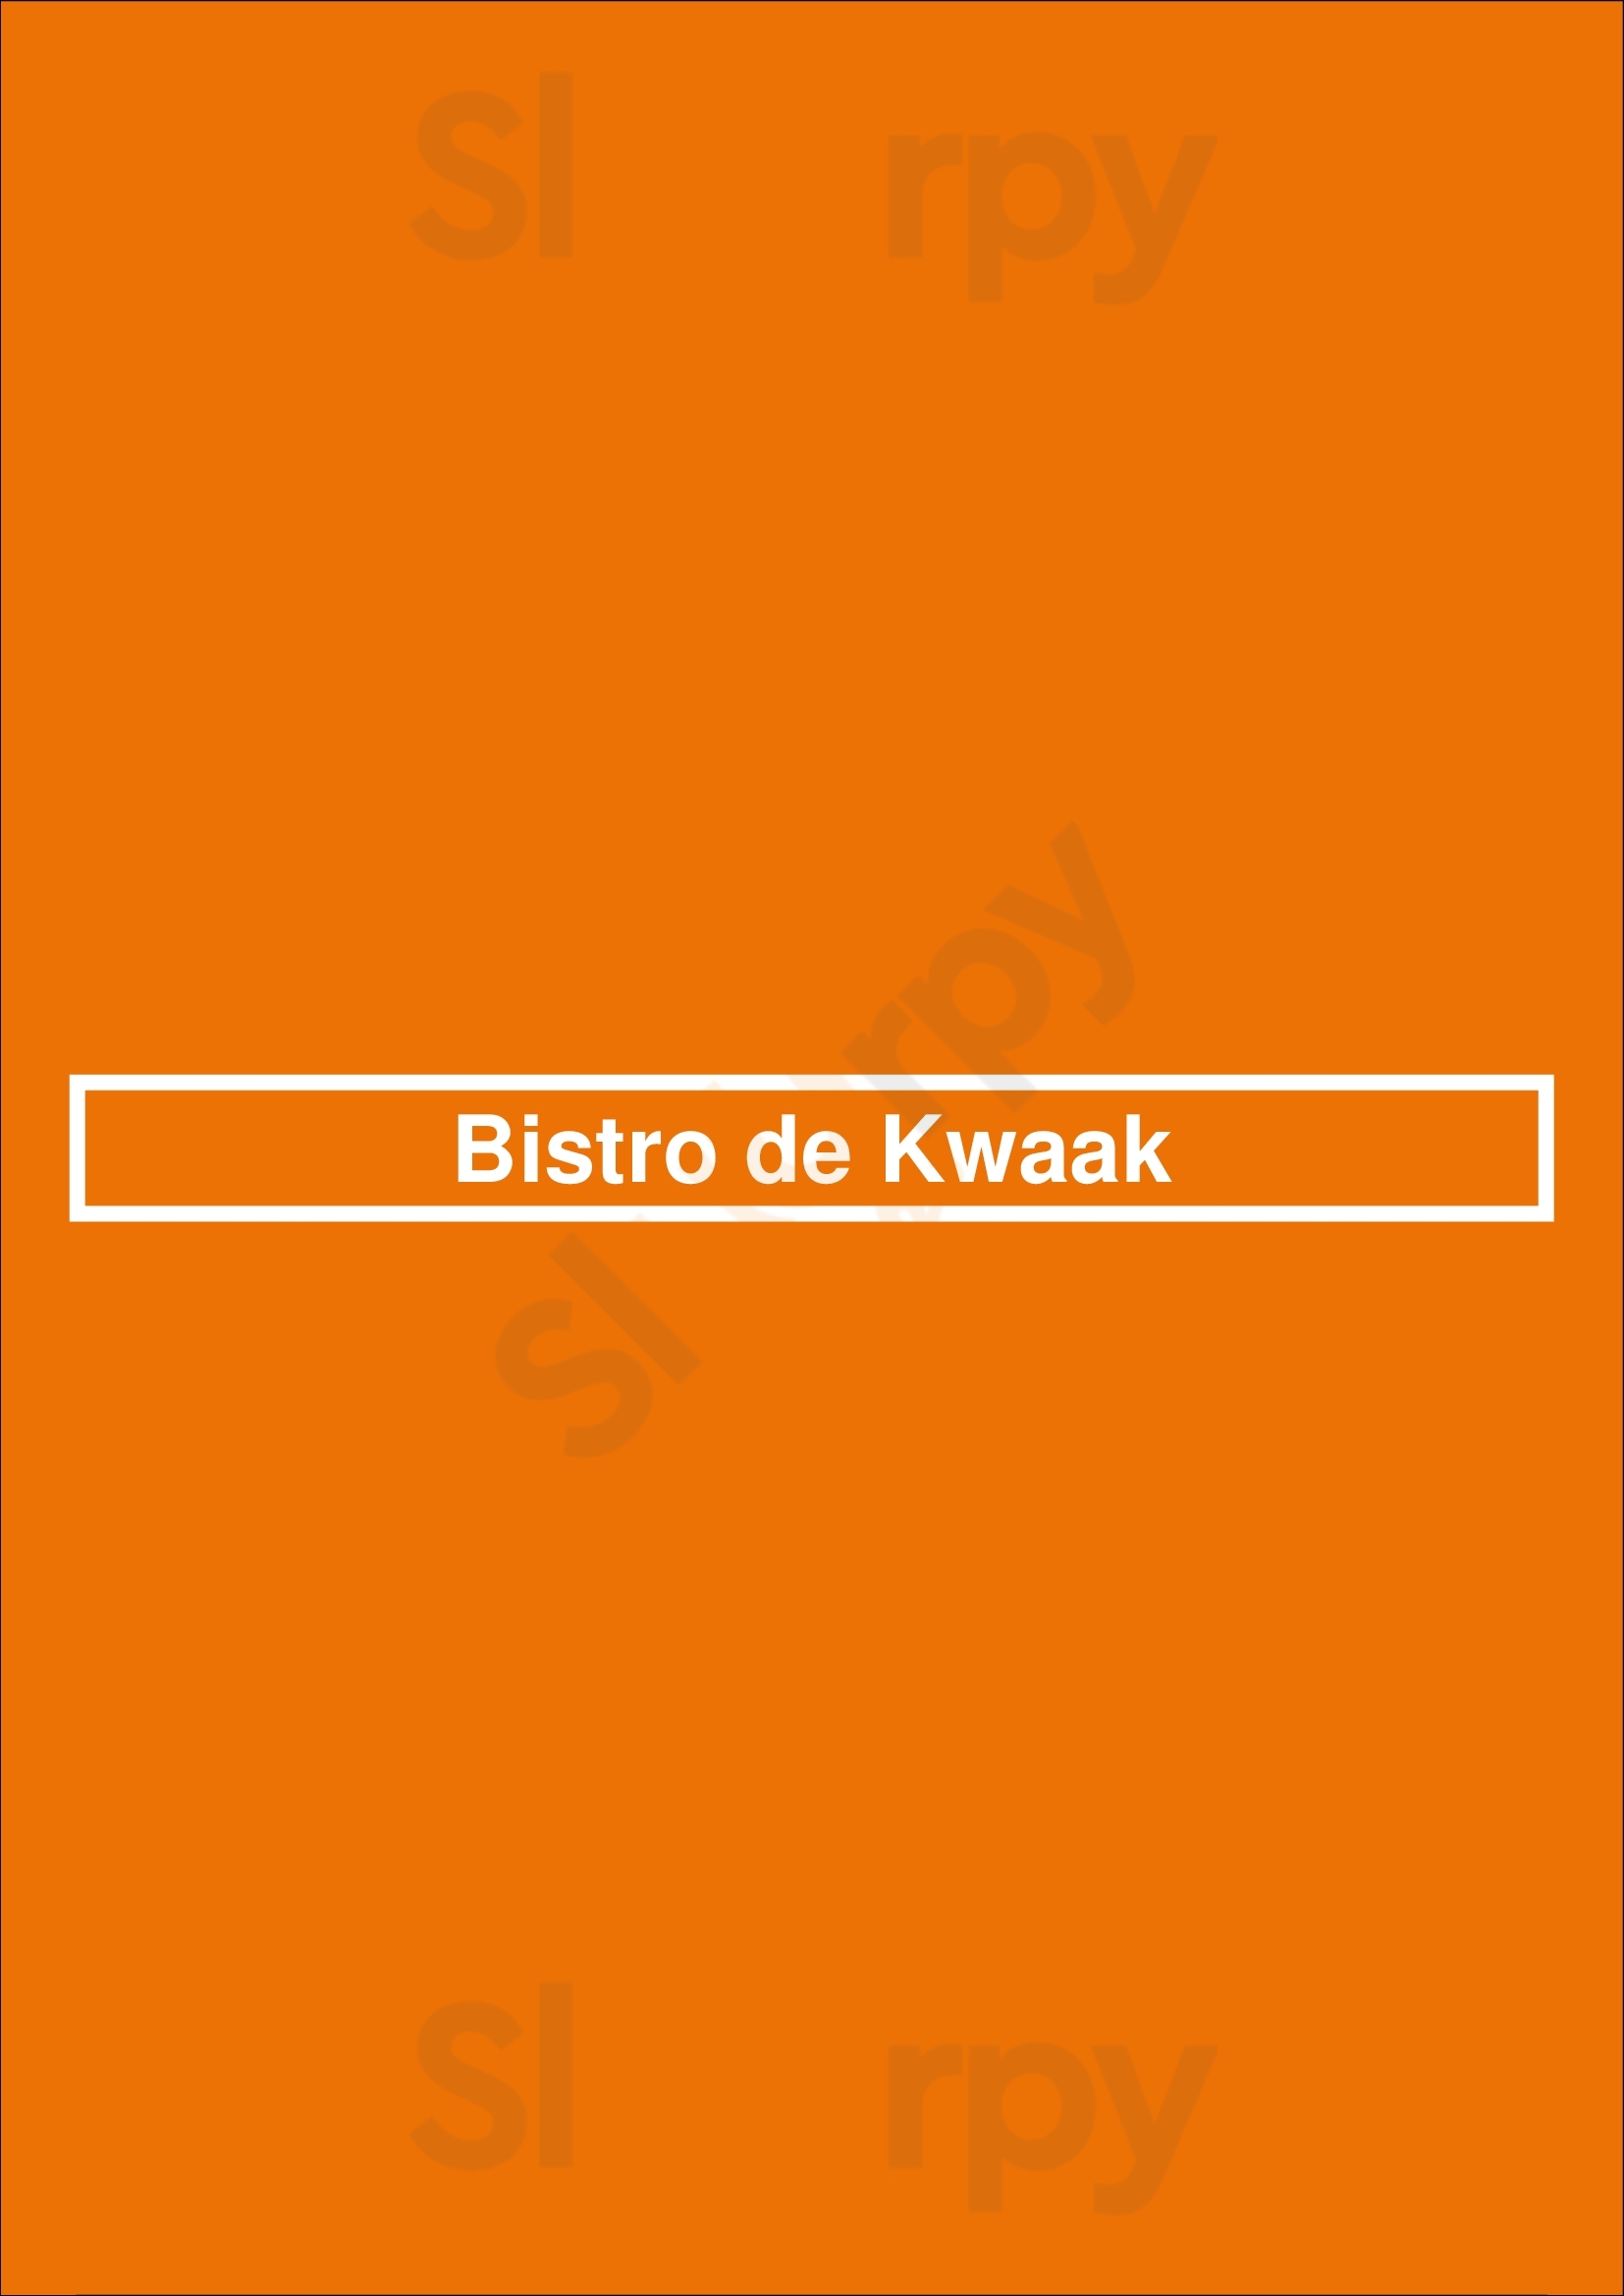 Bistro De Kwaak Zwolle Menu - 1